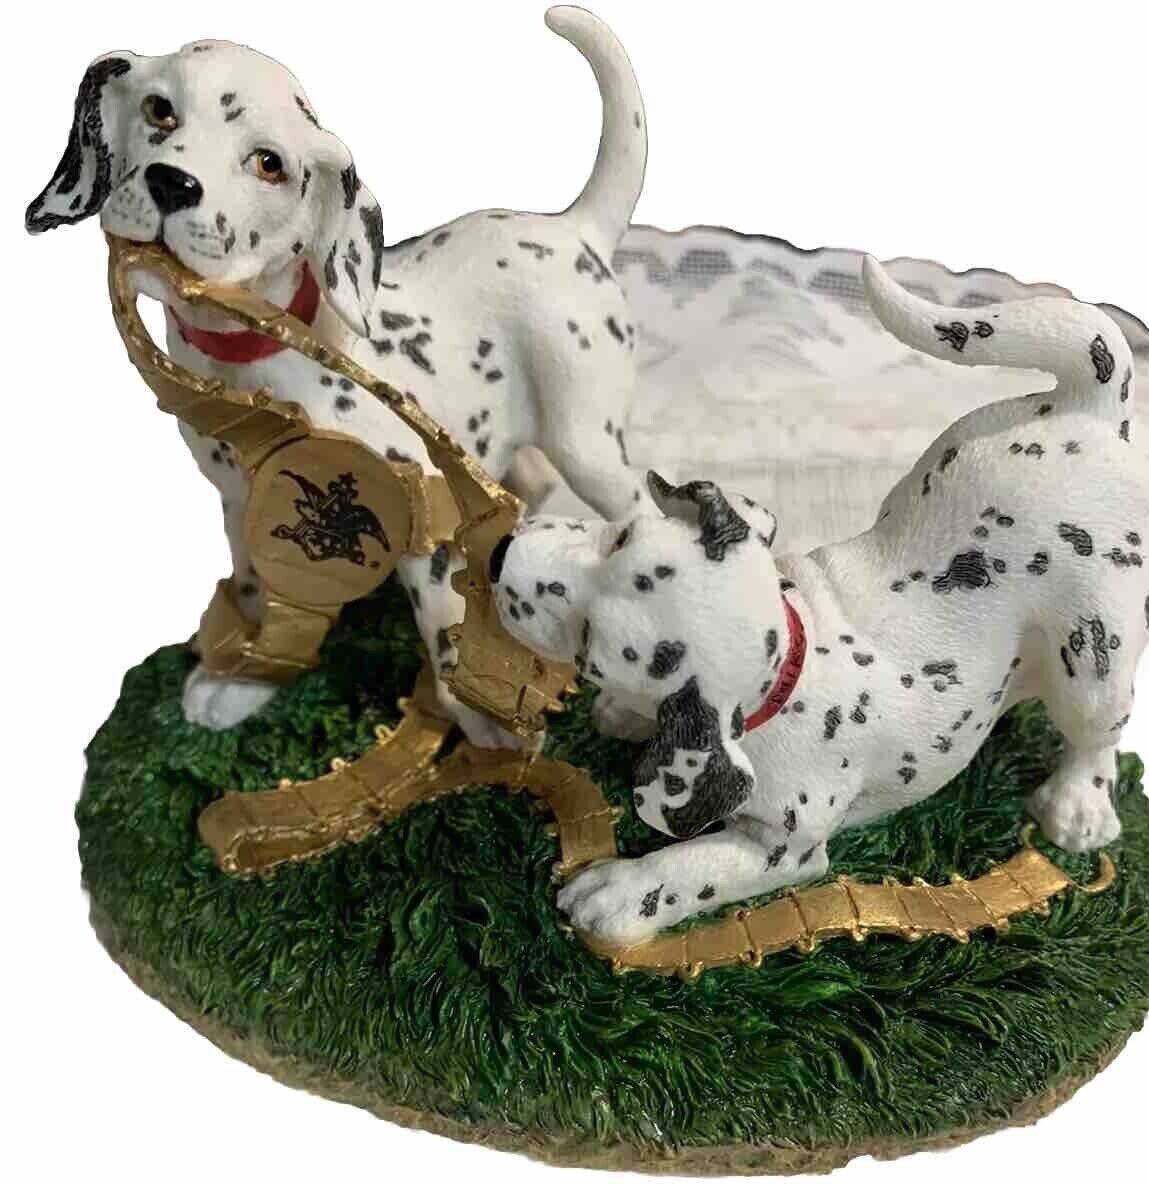 Anheuser-Busch Clydesdale Collection 2001 Dalmatian Puppies figurine Budweiser